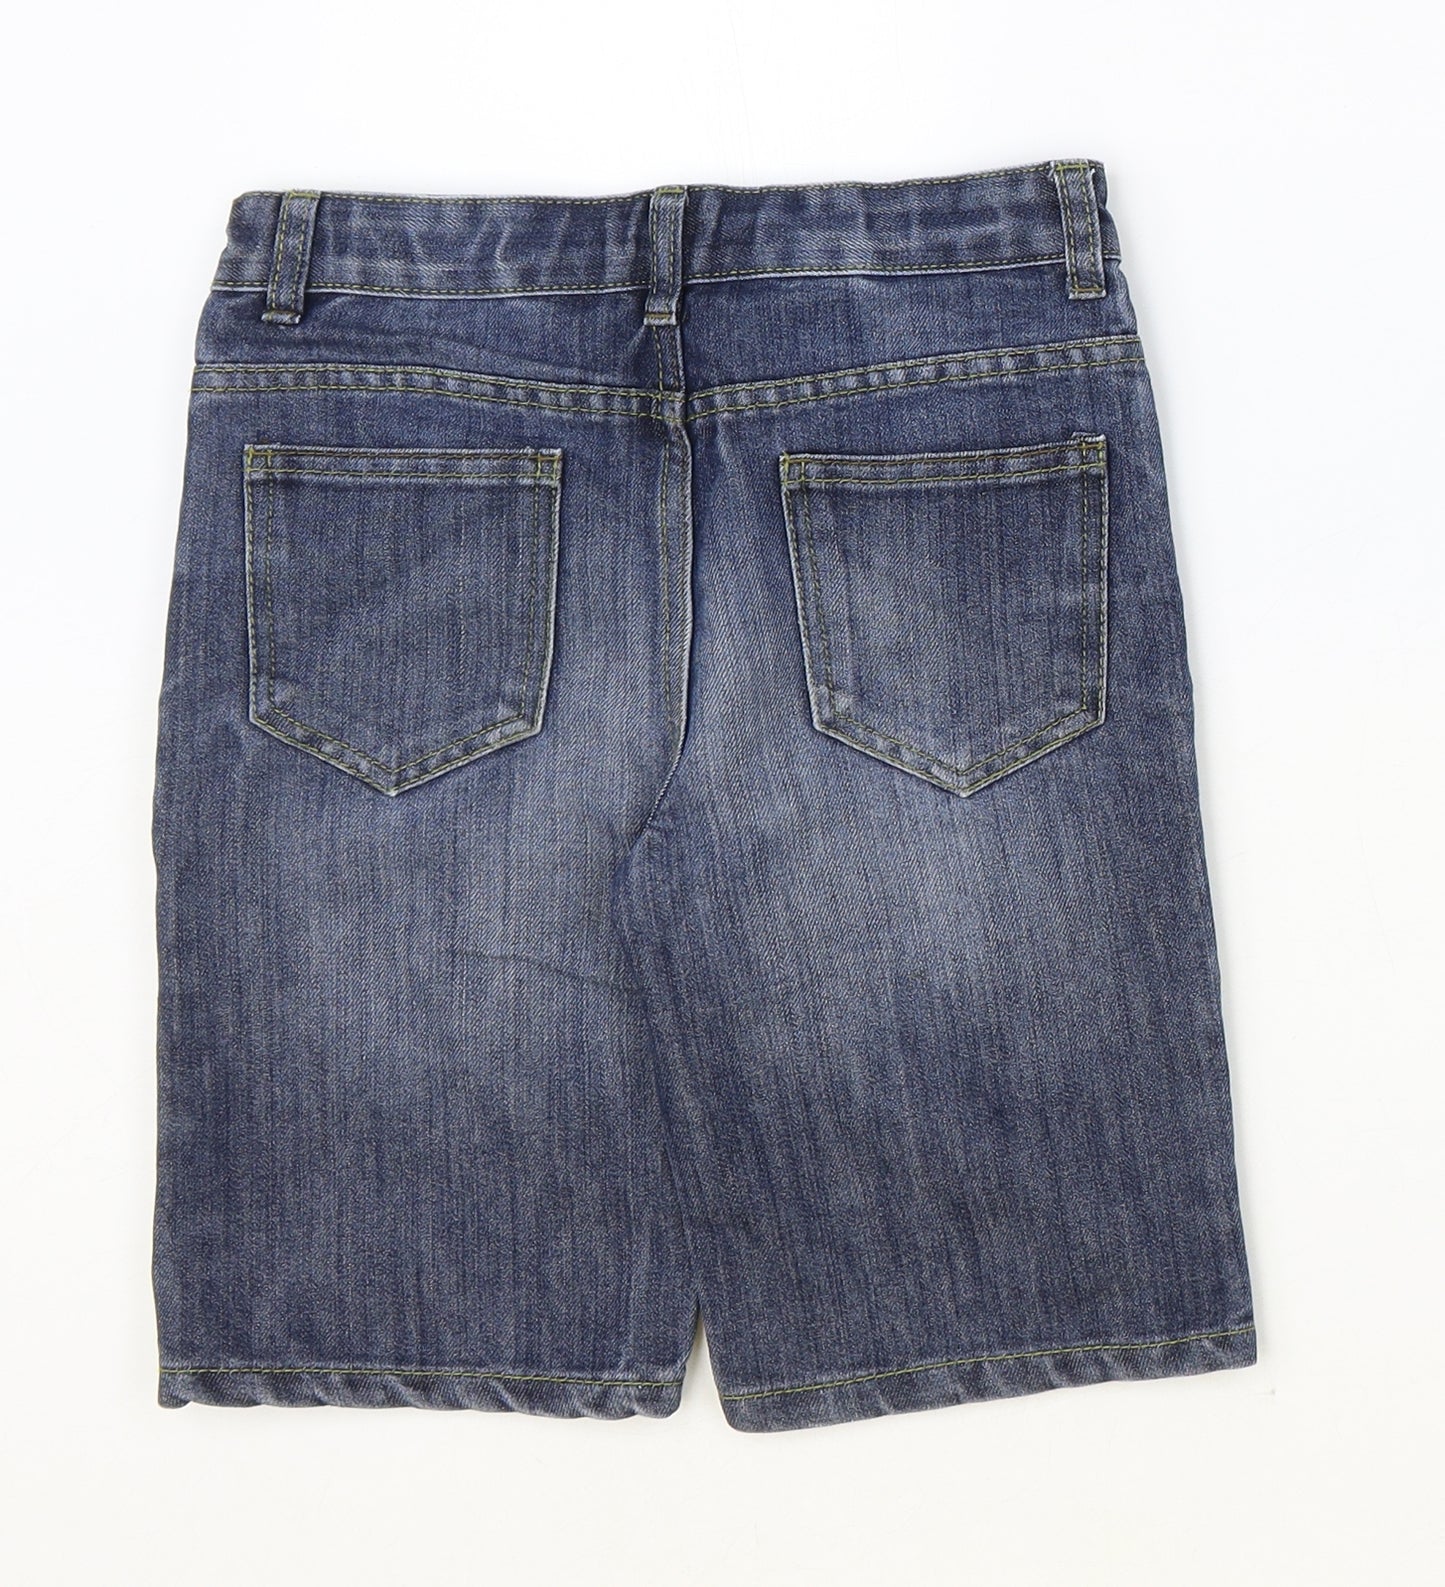 Denim & Co. Boys Blue Cotton Bermuda Shorts Size 8-9 Years Regular Zip